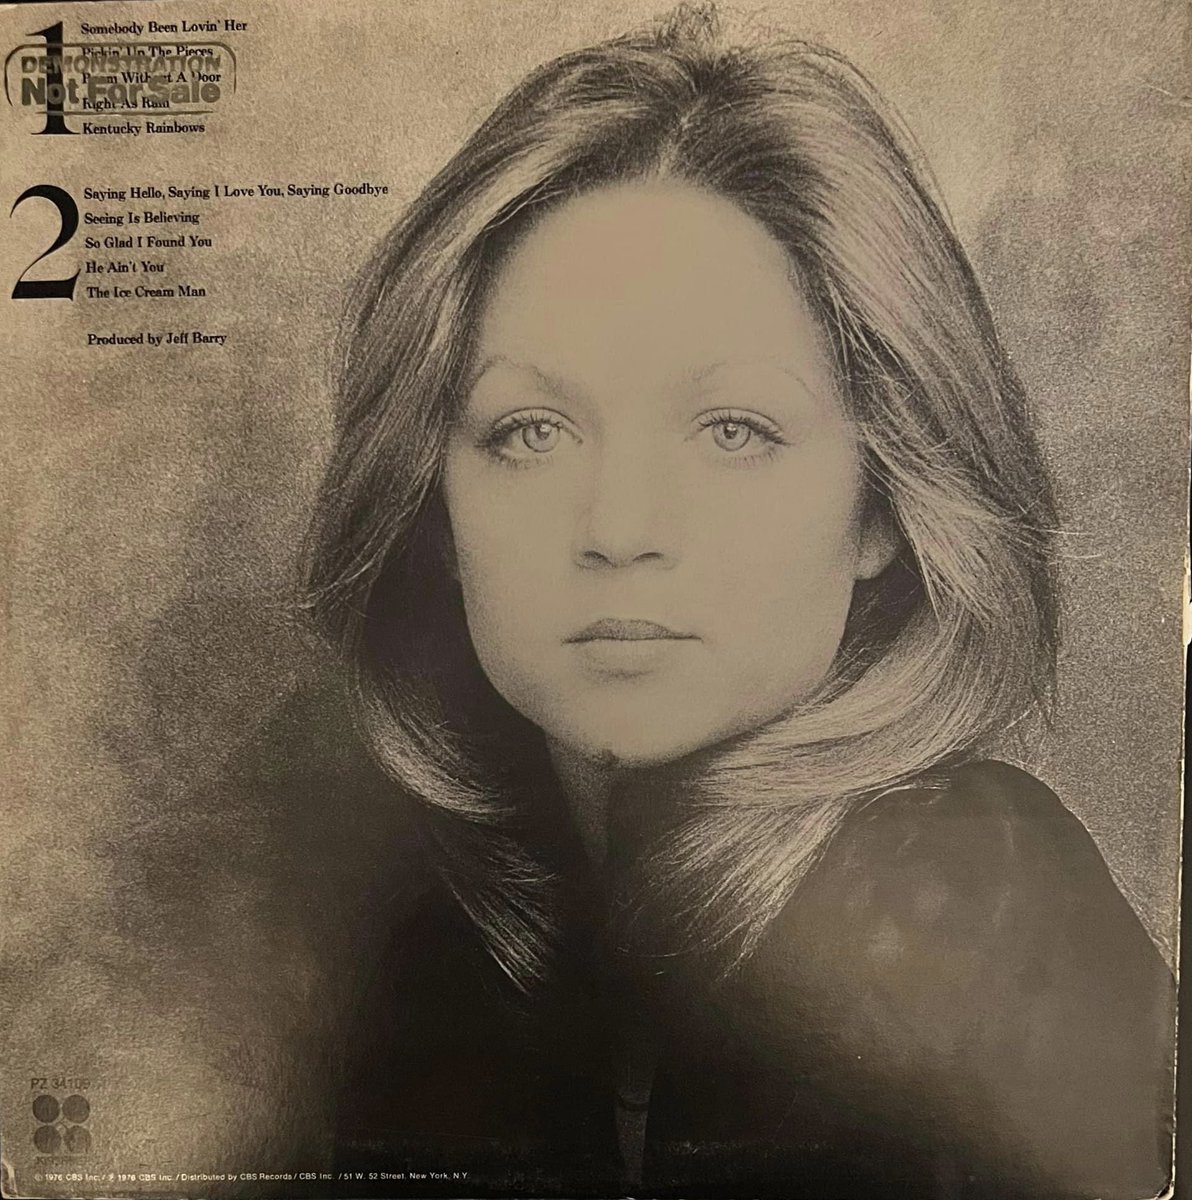 The back photo of @lisahbofficial’s debut album, “Lisa Hartman” in 1976. Lisa’s daughter, @lilypblack really looks like Lisa here.